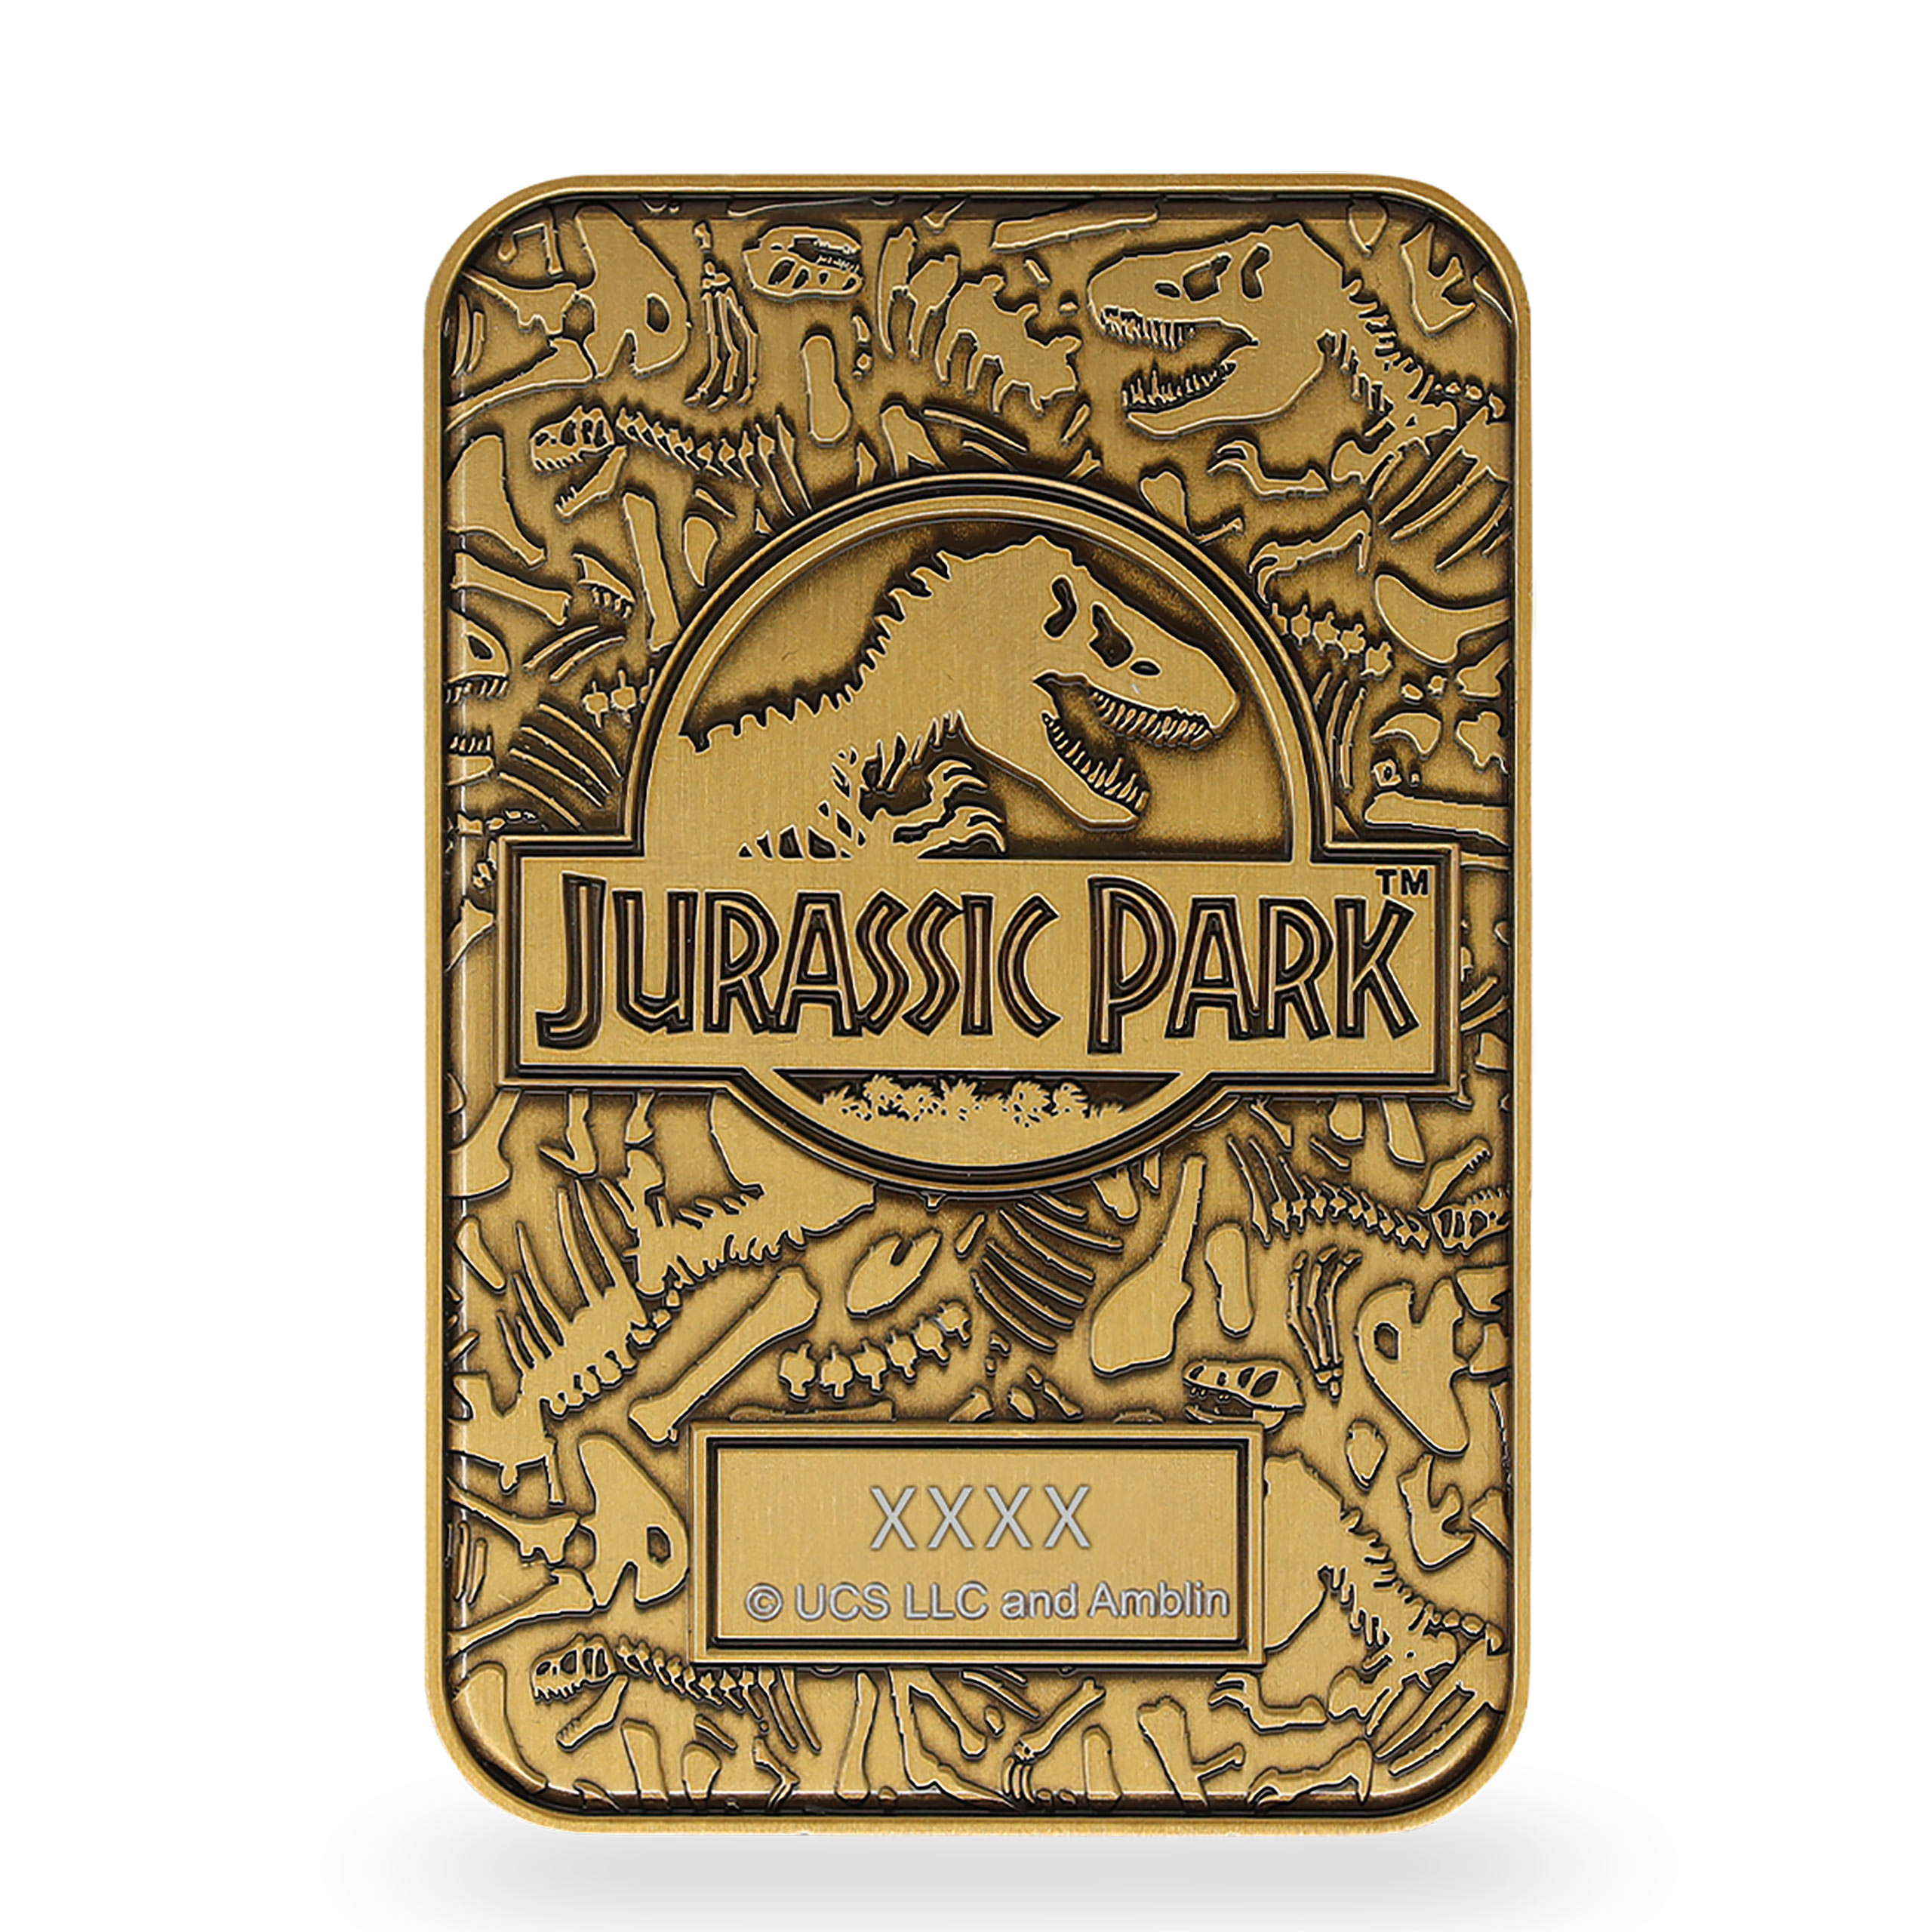 Jurassic Park - Moskito in Amber Metallbarren Replik limitiert